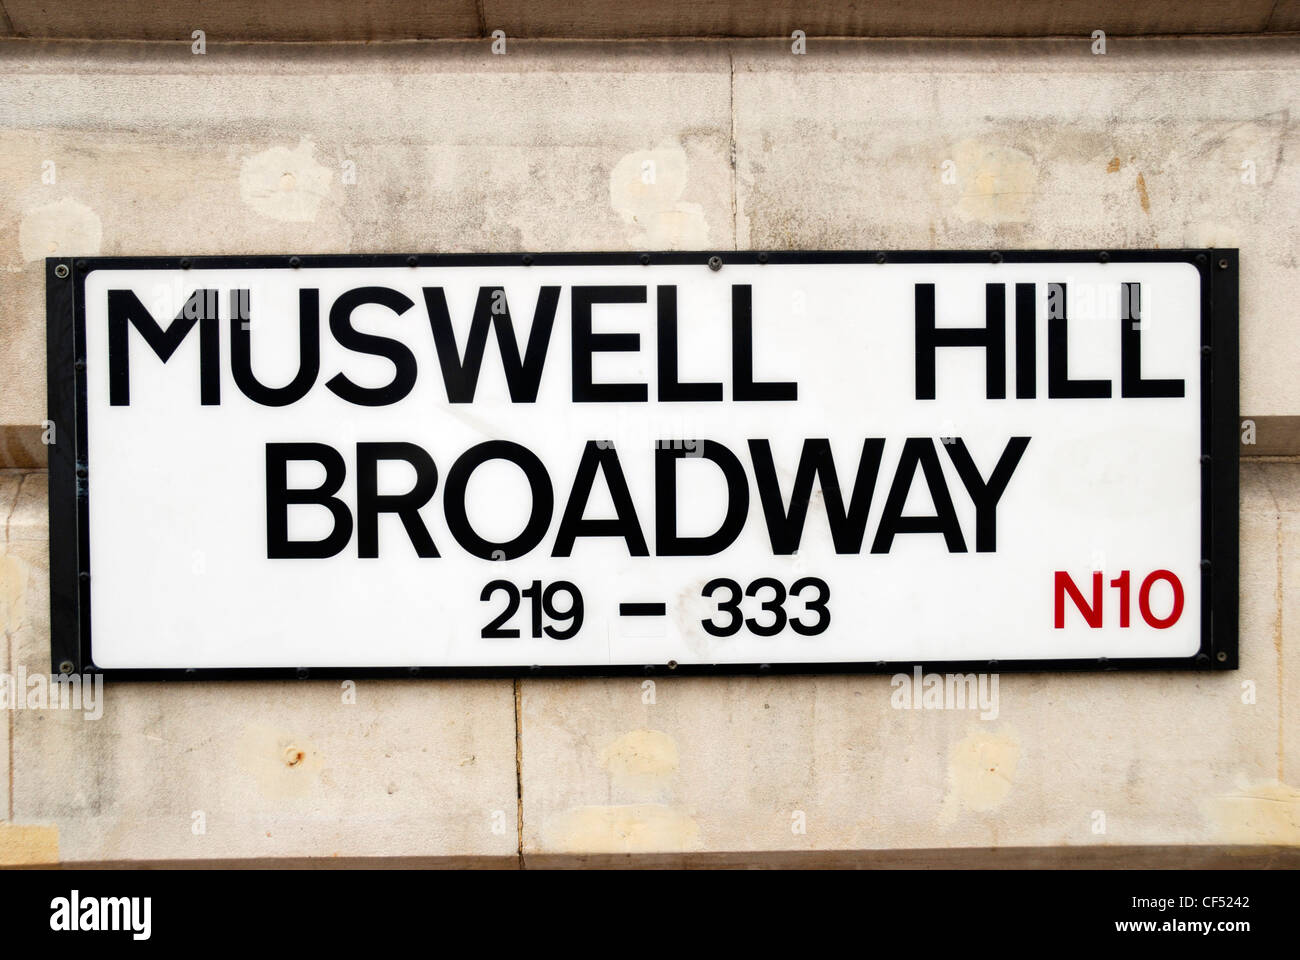 Muswell Hill Broadway N10 Plaque de rue. Banque D'Images